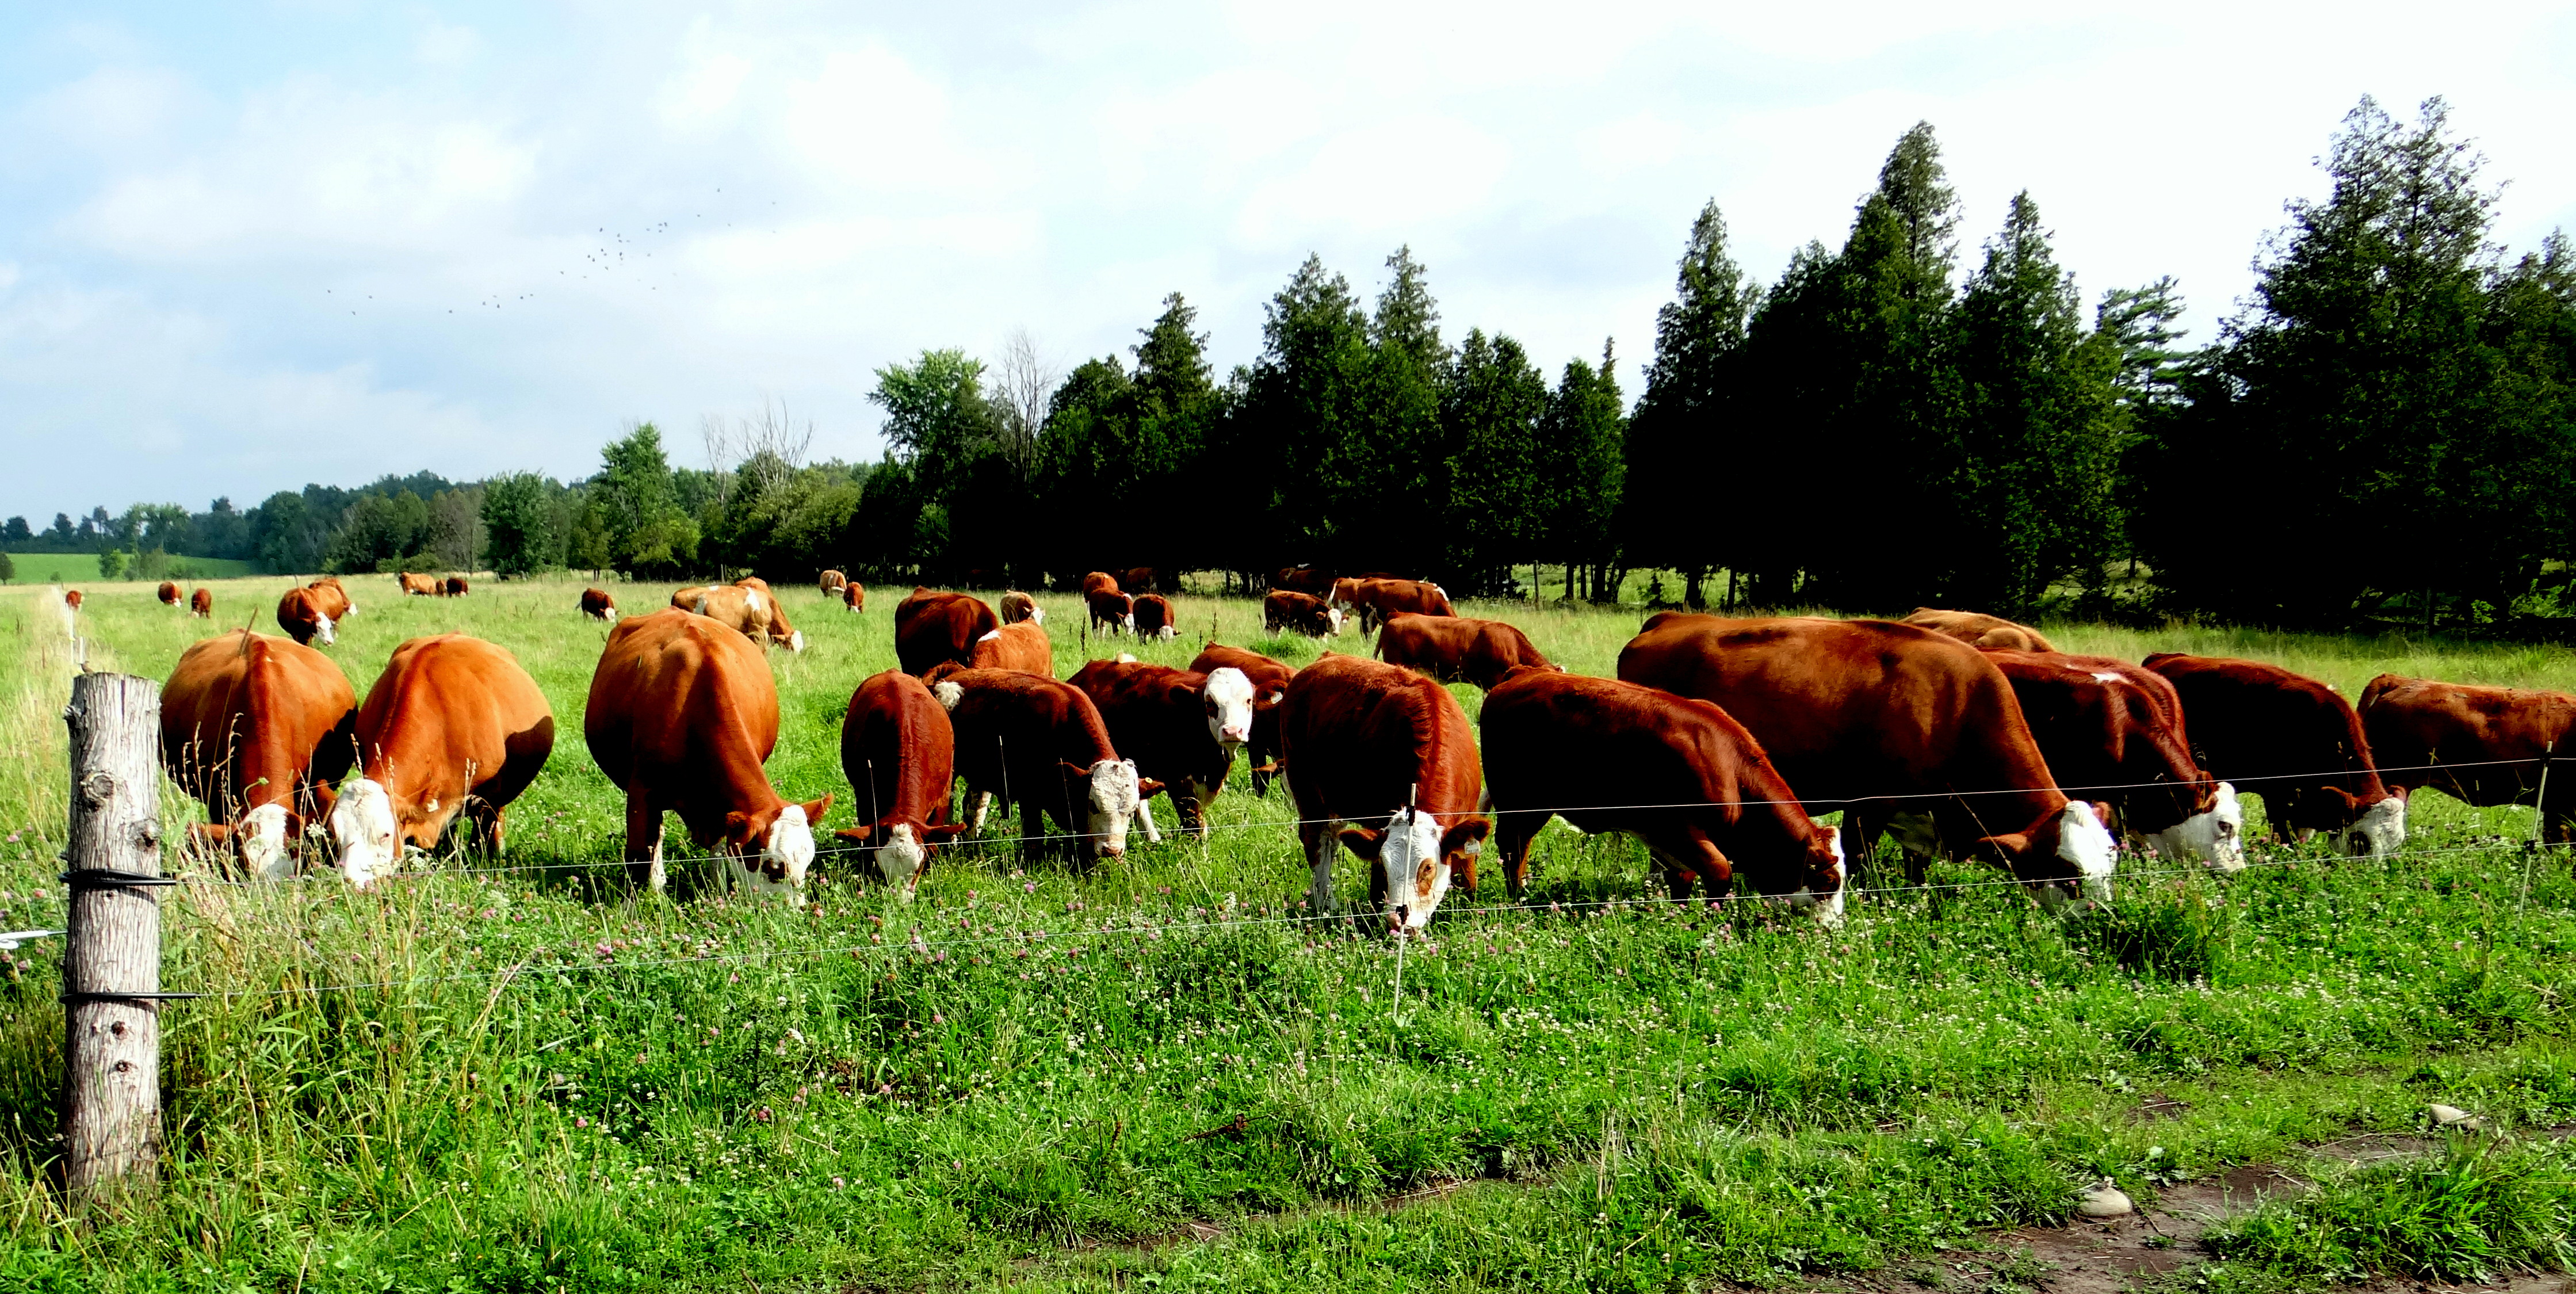 cows-on-grass-greenestdsc01080.jpg